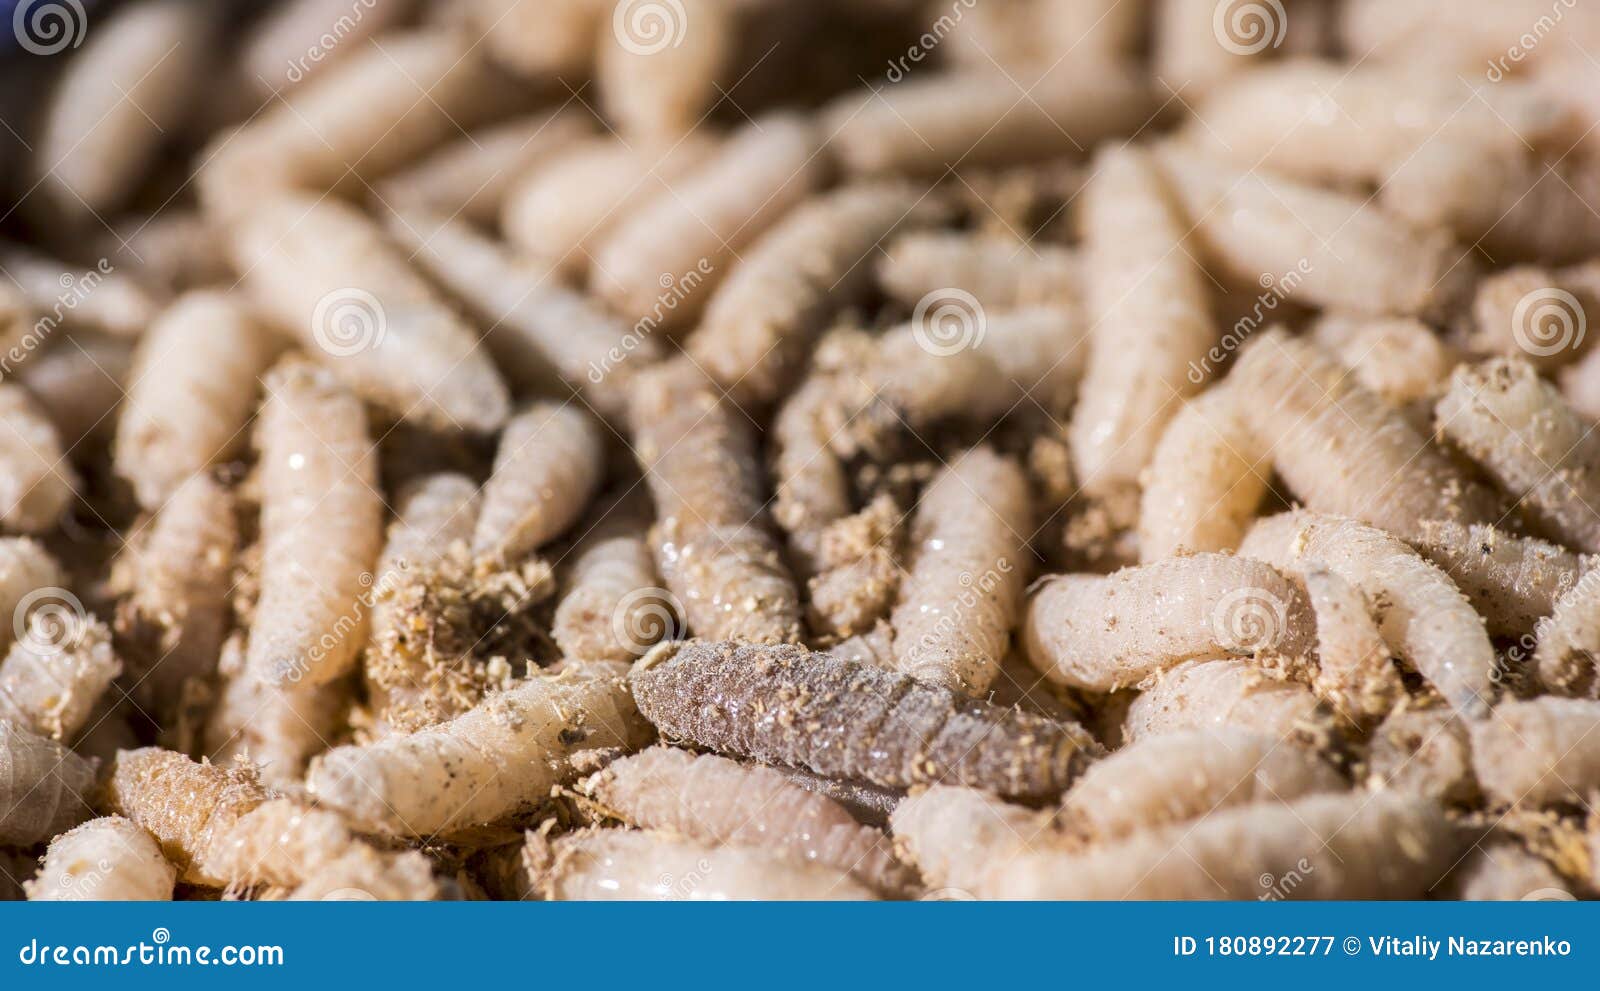 Macro Photo of Live Maggots, Bait for Fishing Stock Image - Image